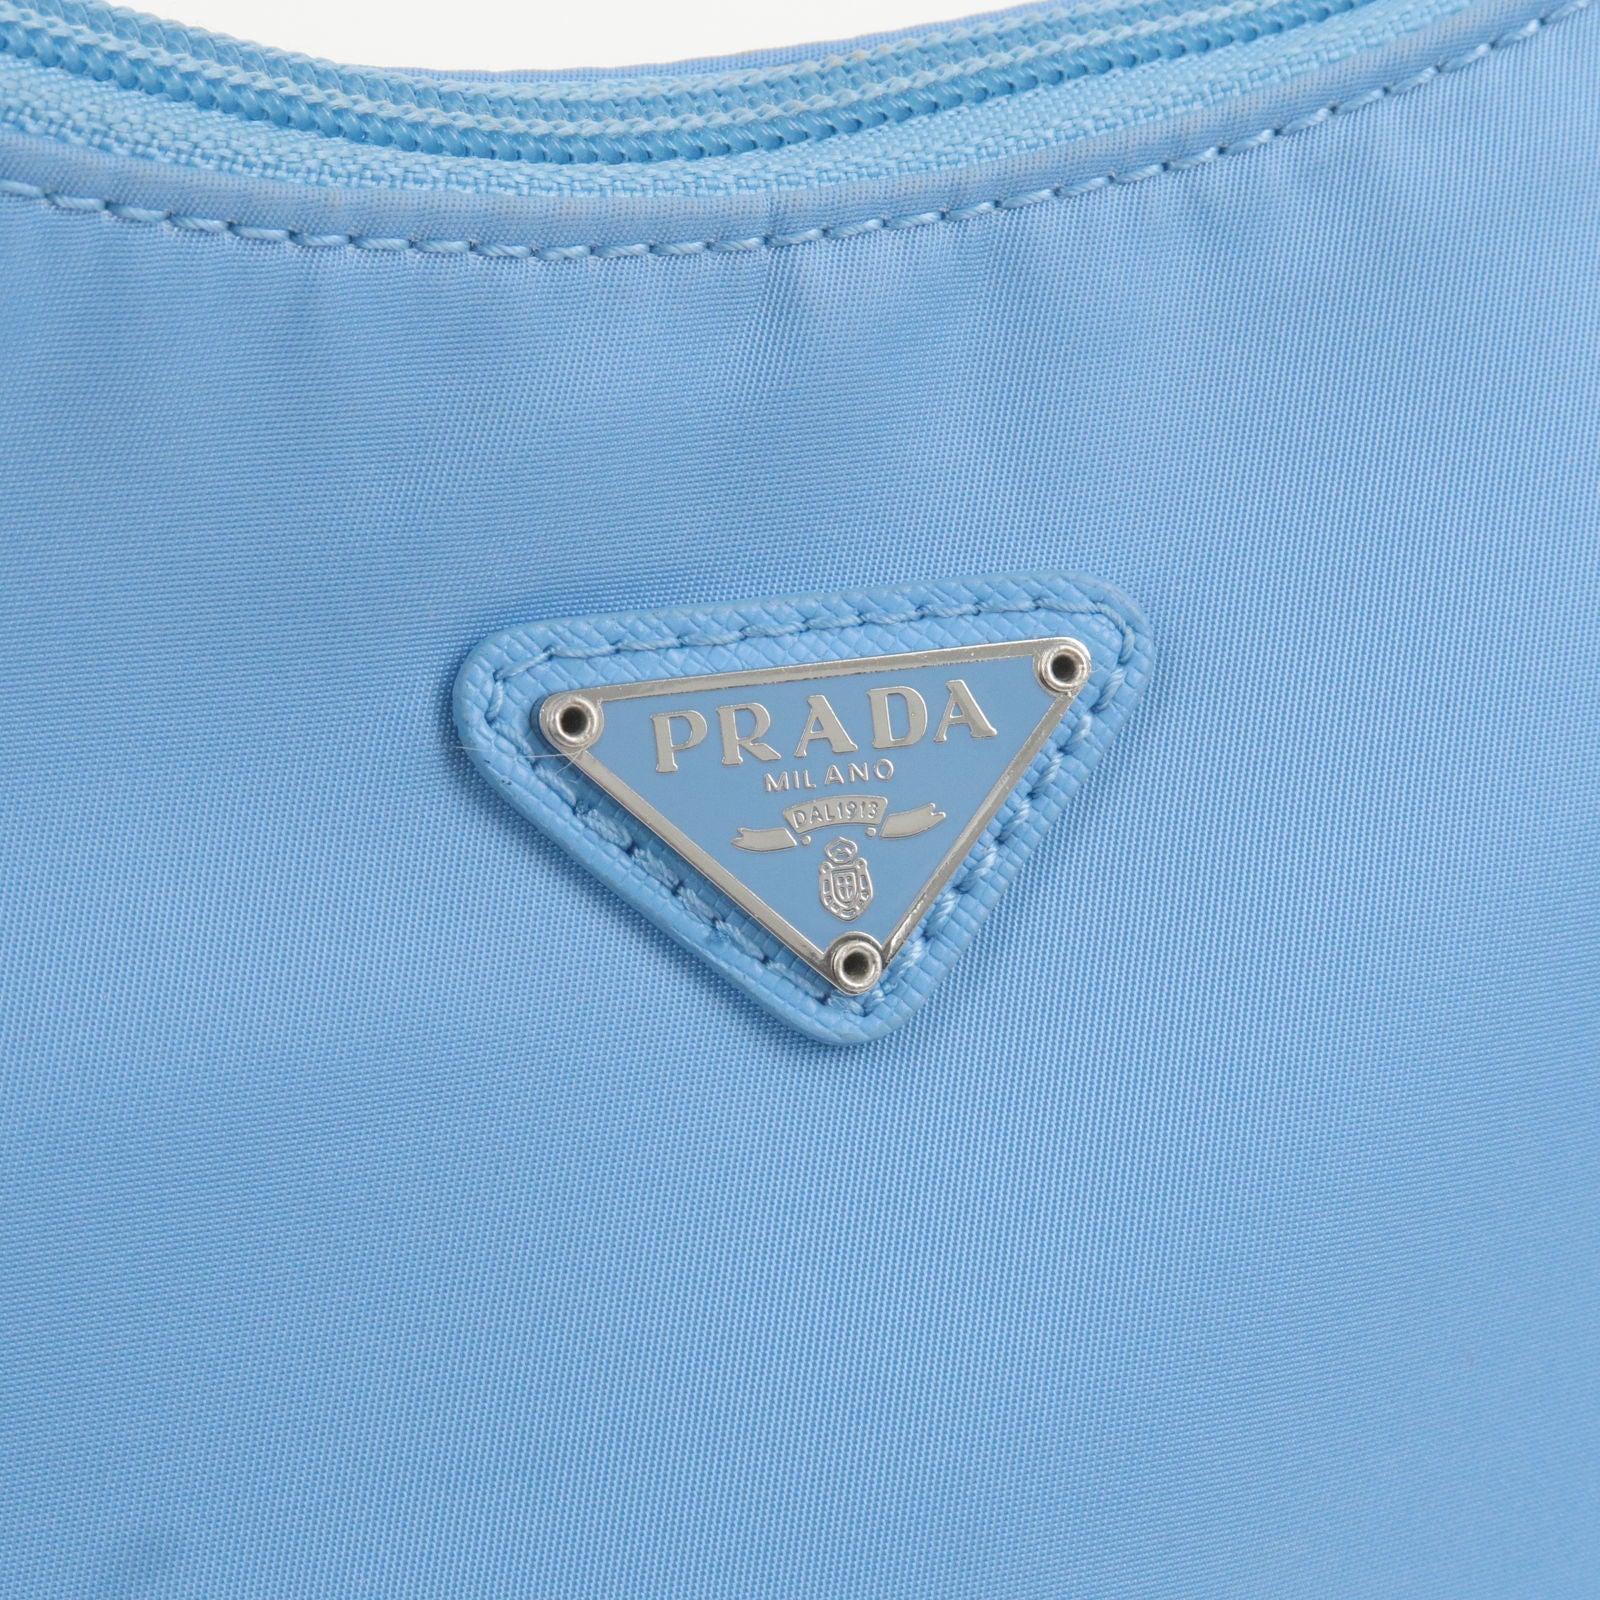 Prada Re-Edition 2000 Mini Bag Periwinkle Blue